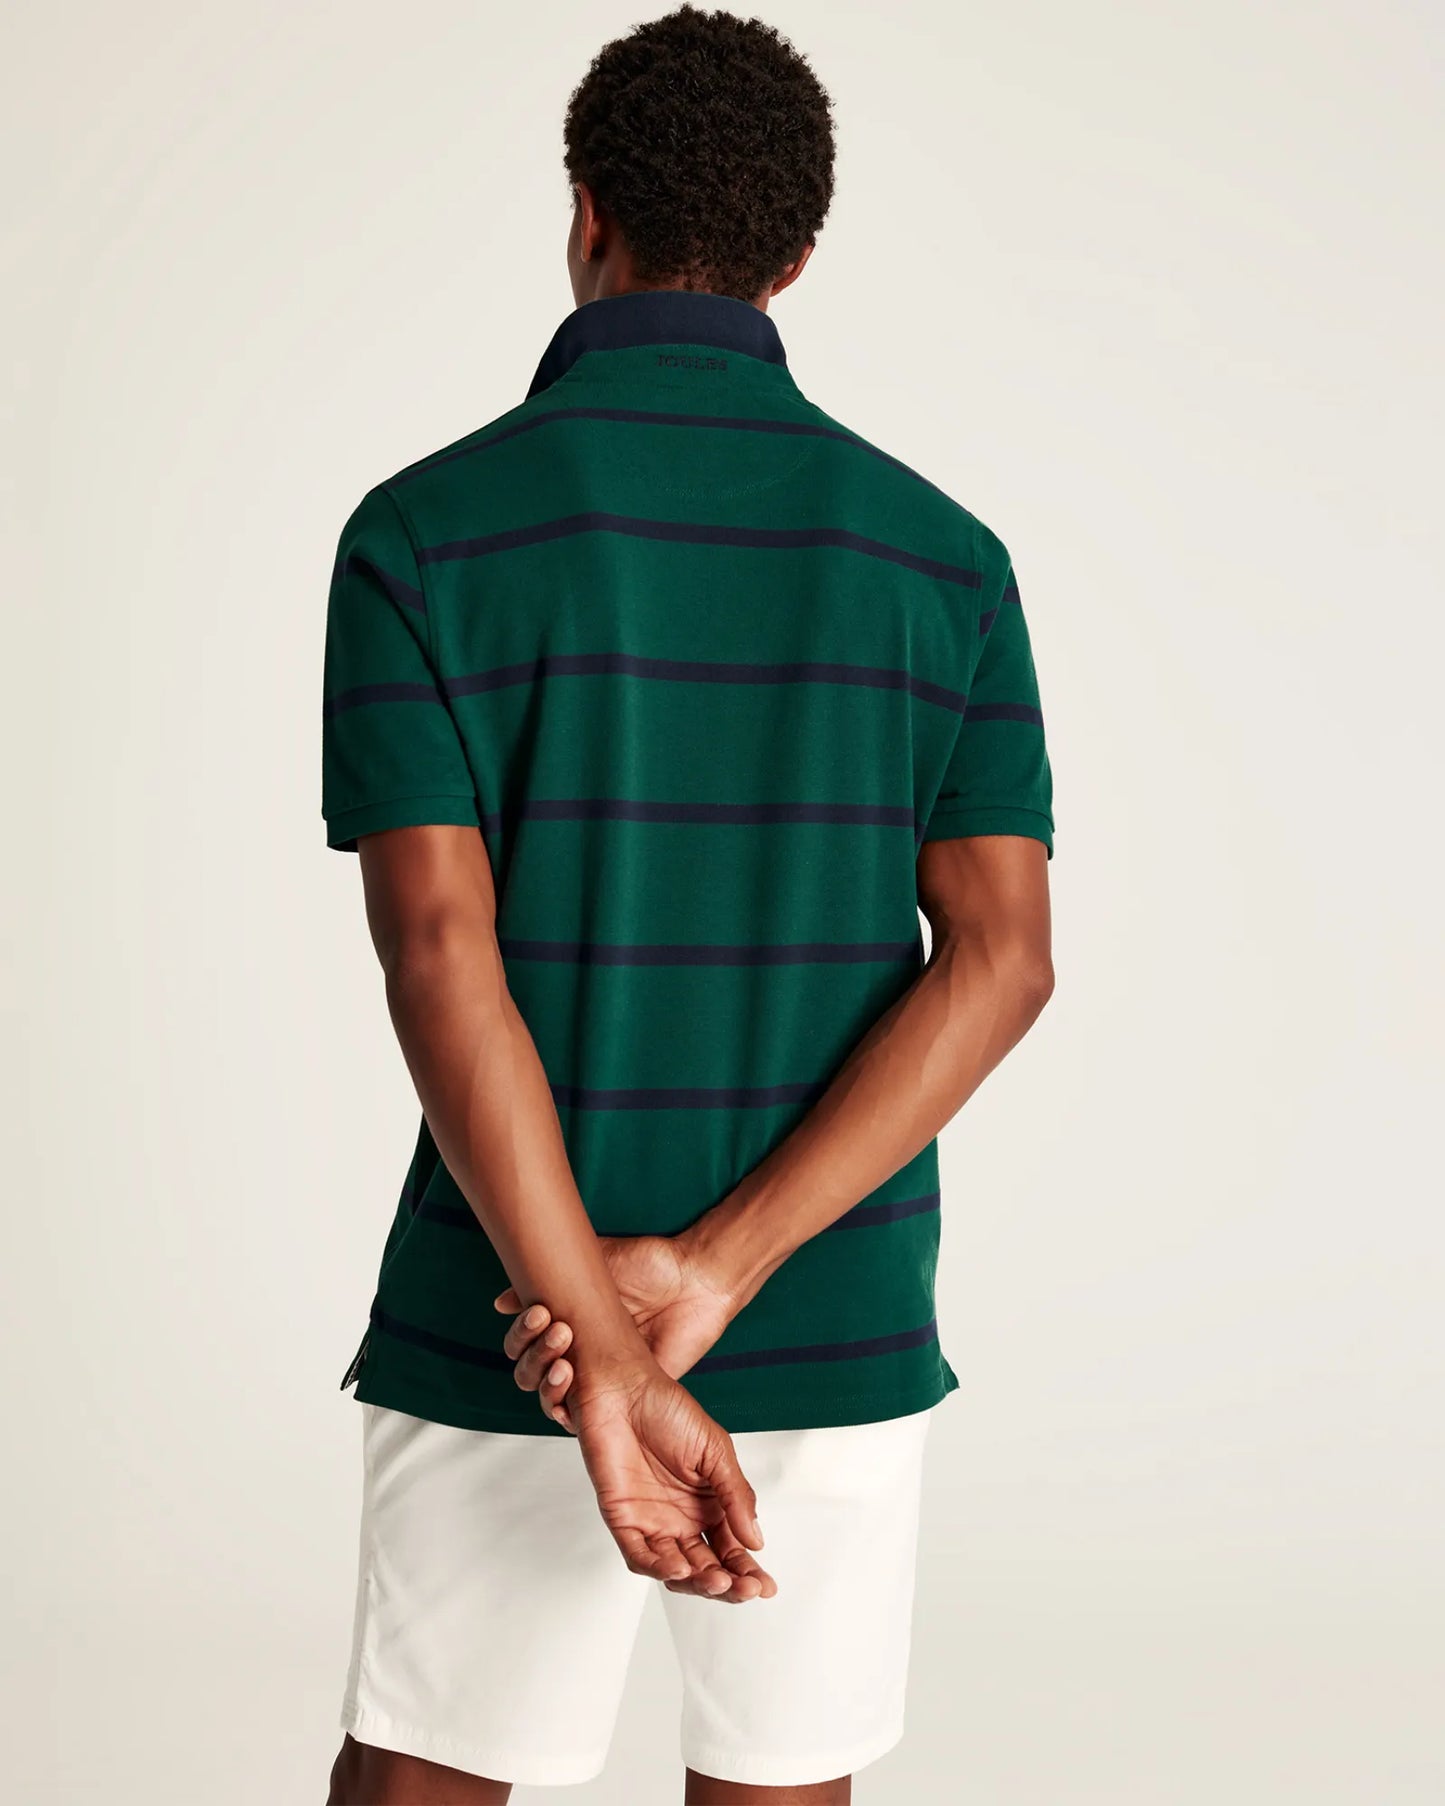 Filbert Classic Fit Striped Polo Shirt - Green Stripe